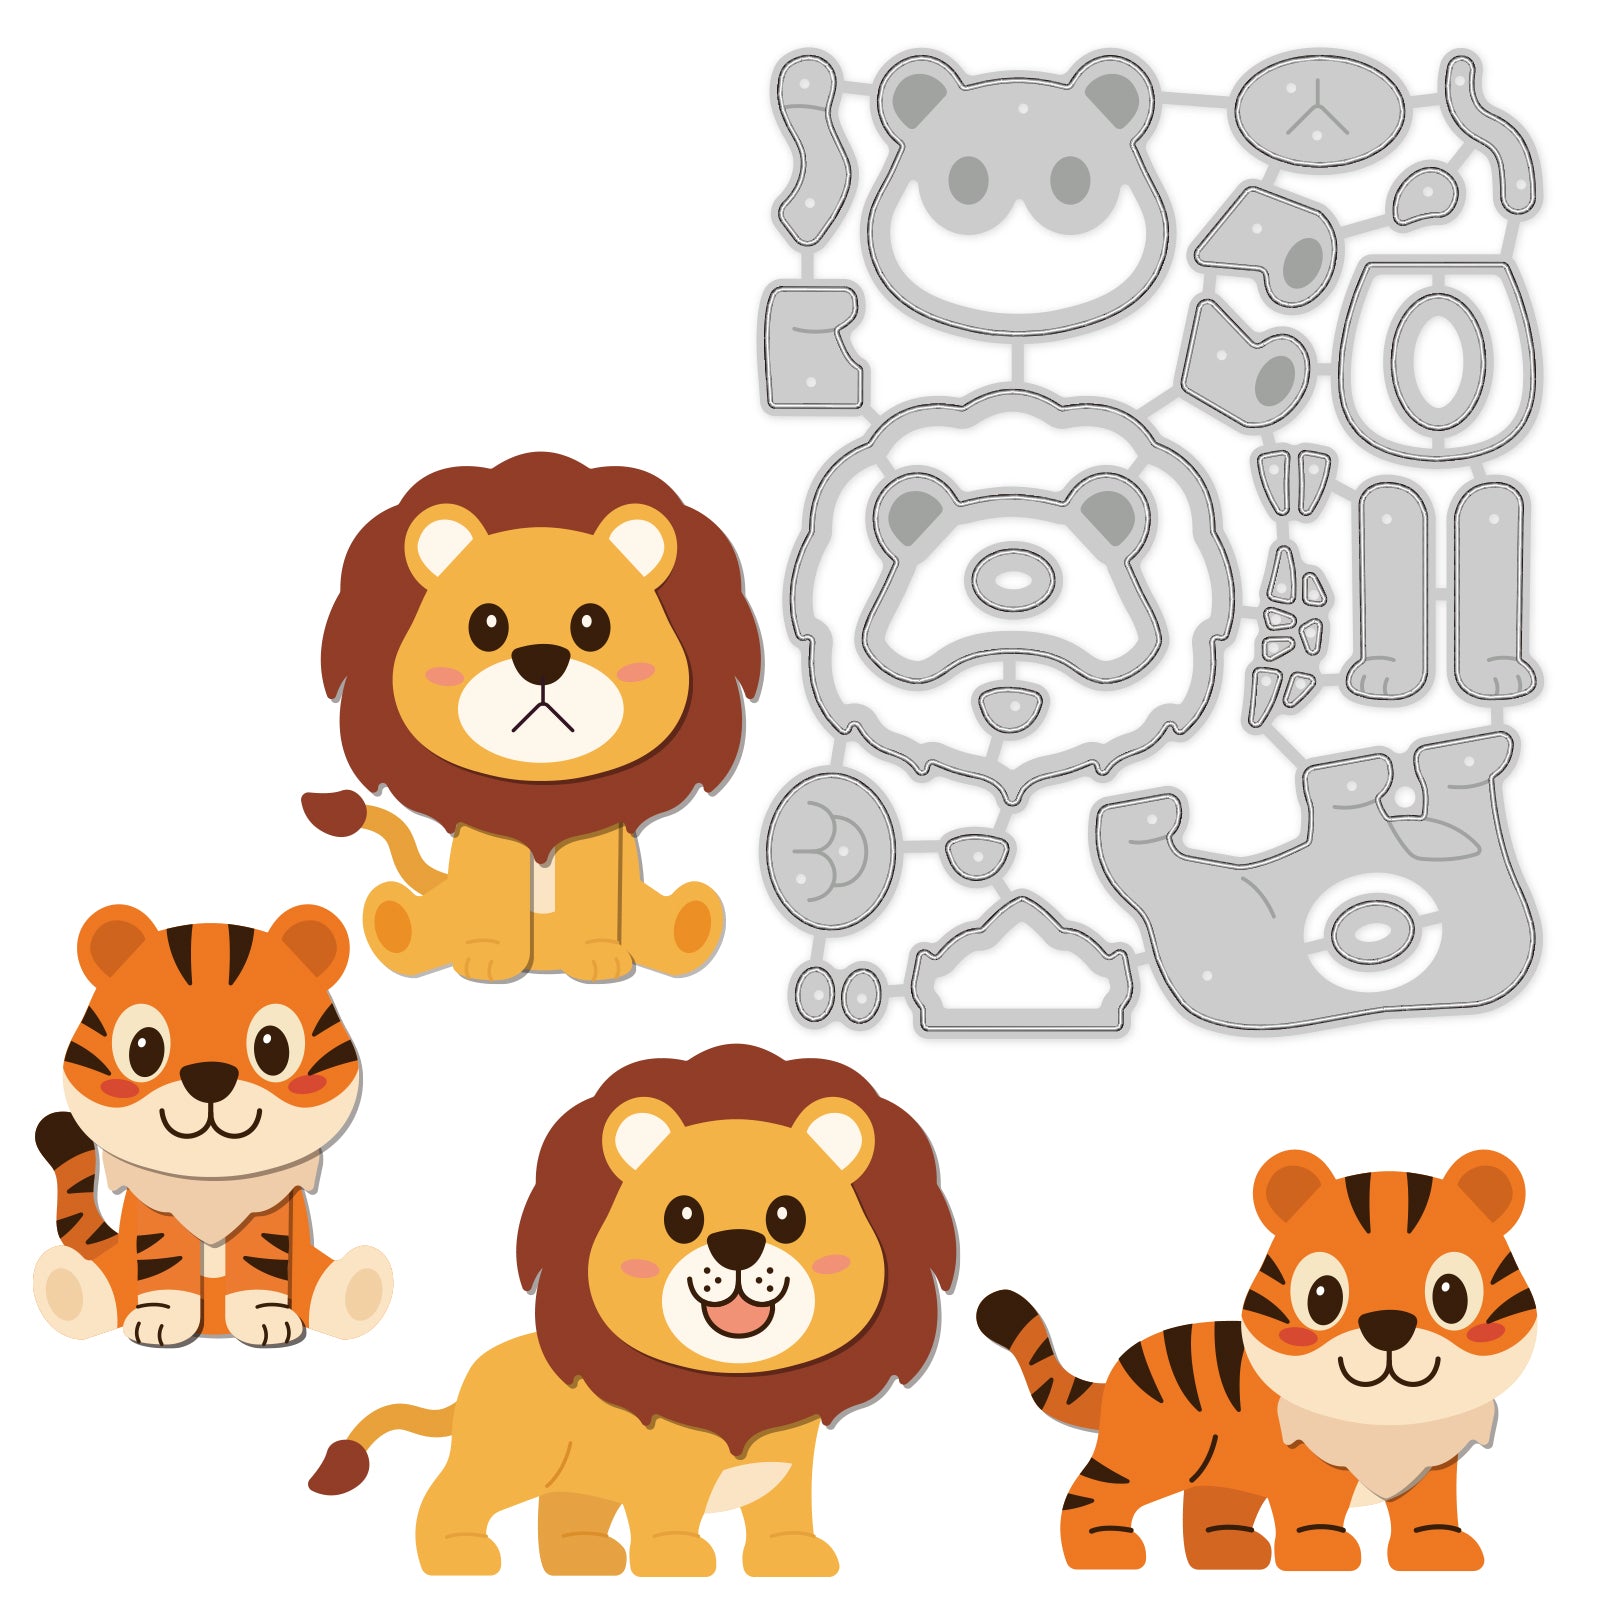 Globleland Lion, Tiger, Cute Animals, Greeting Card Carbon Steel Cutting Dies Stencils, for DIY Scrapbooking/Photo Album, Decorative Embossing DIY Paper Card